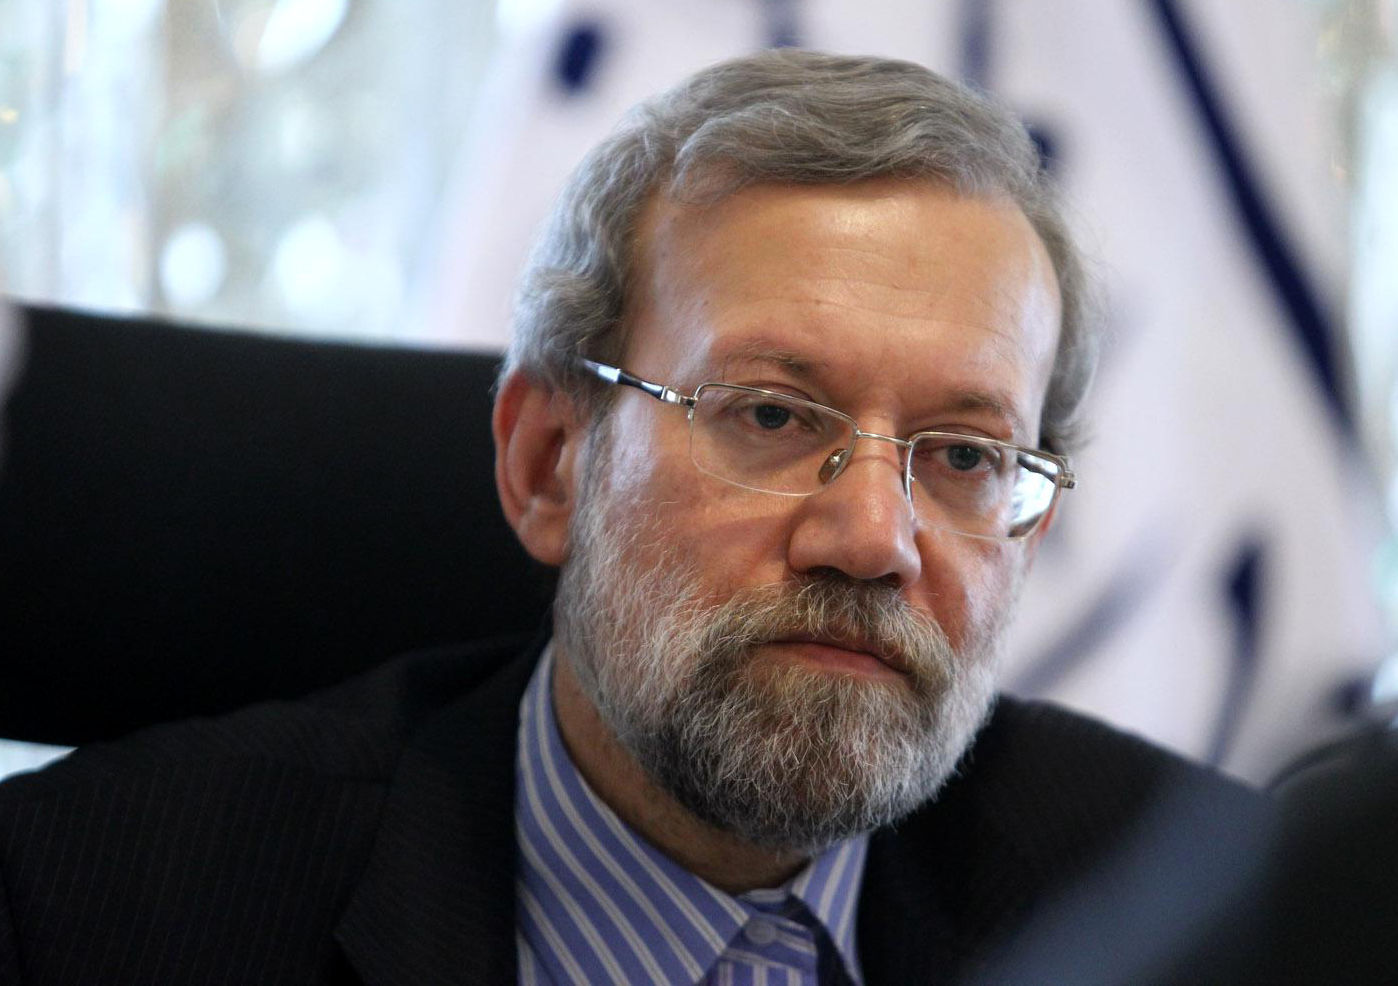 Iran parliament seeking to address manufacturers’ problems: Speaker